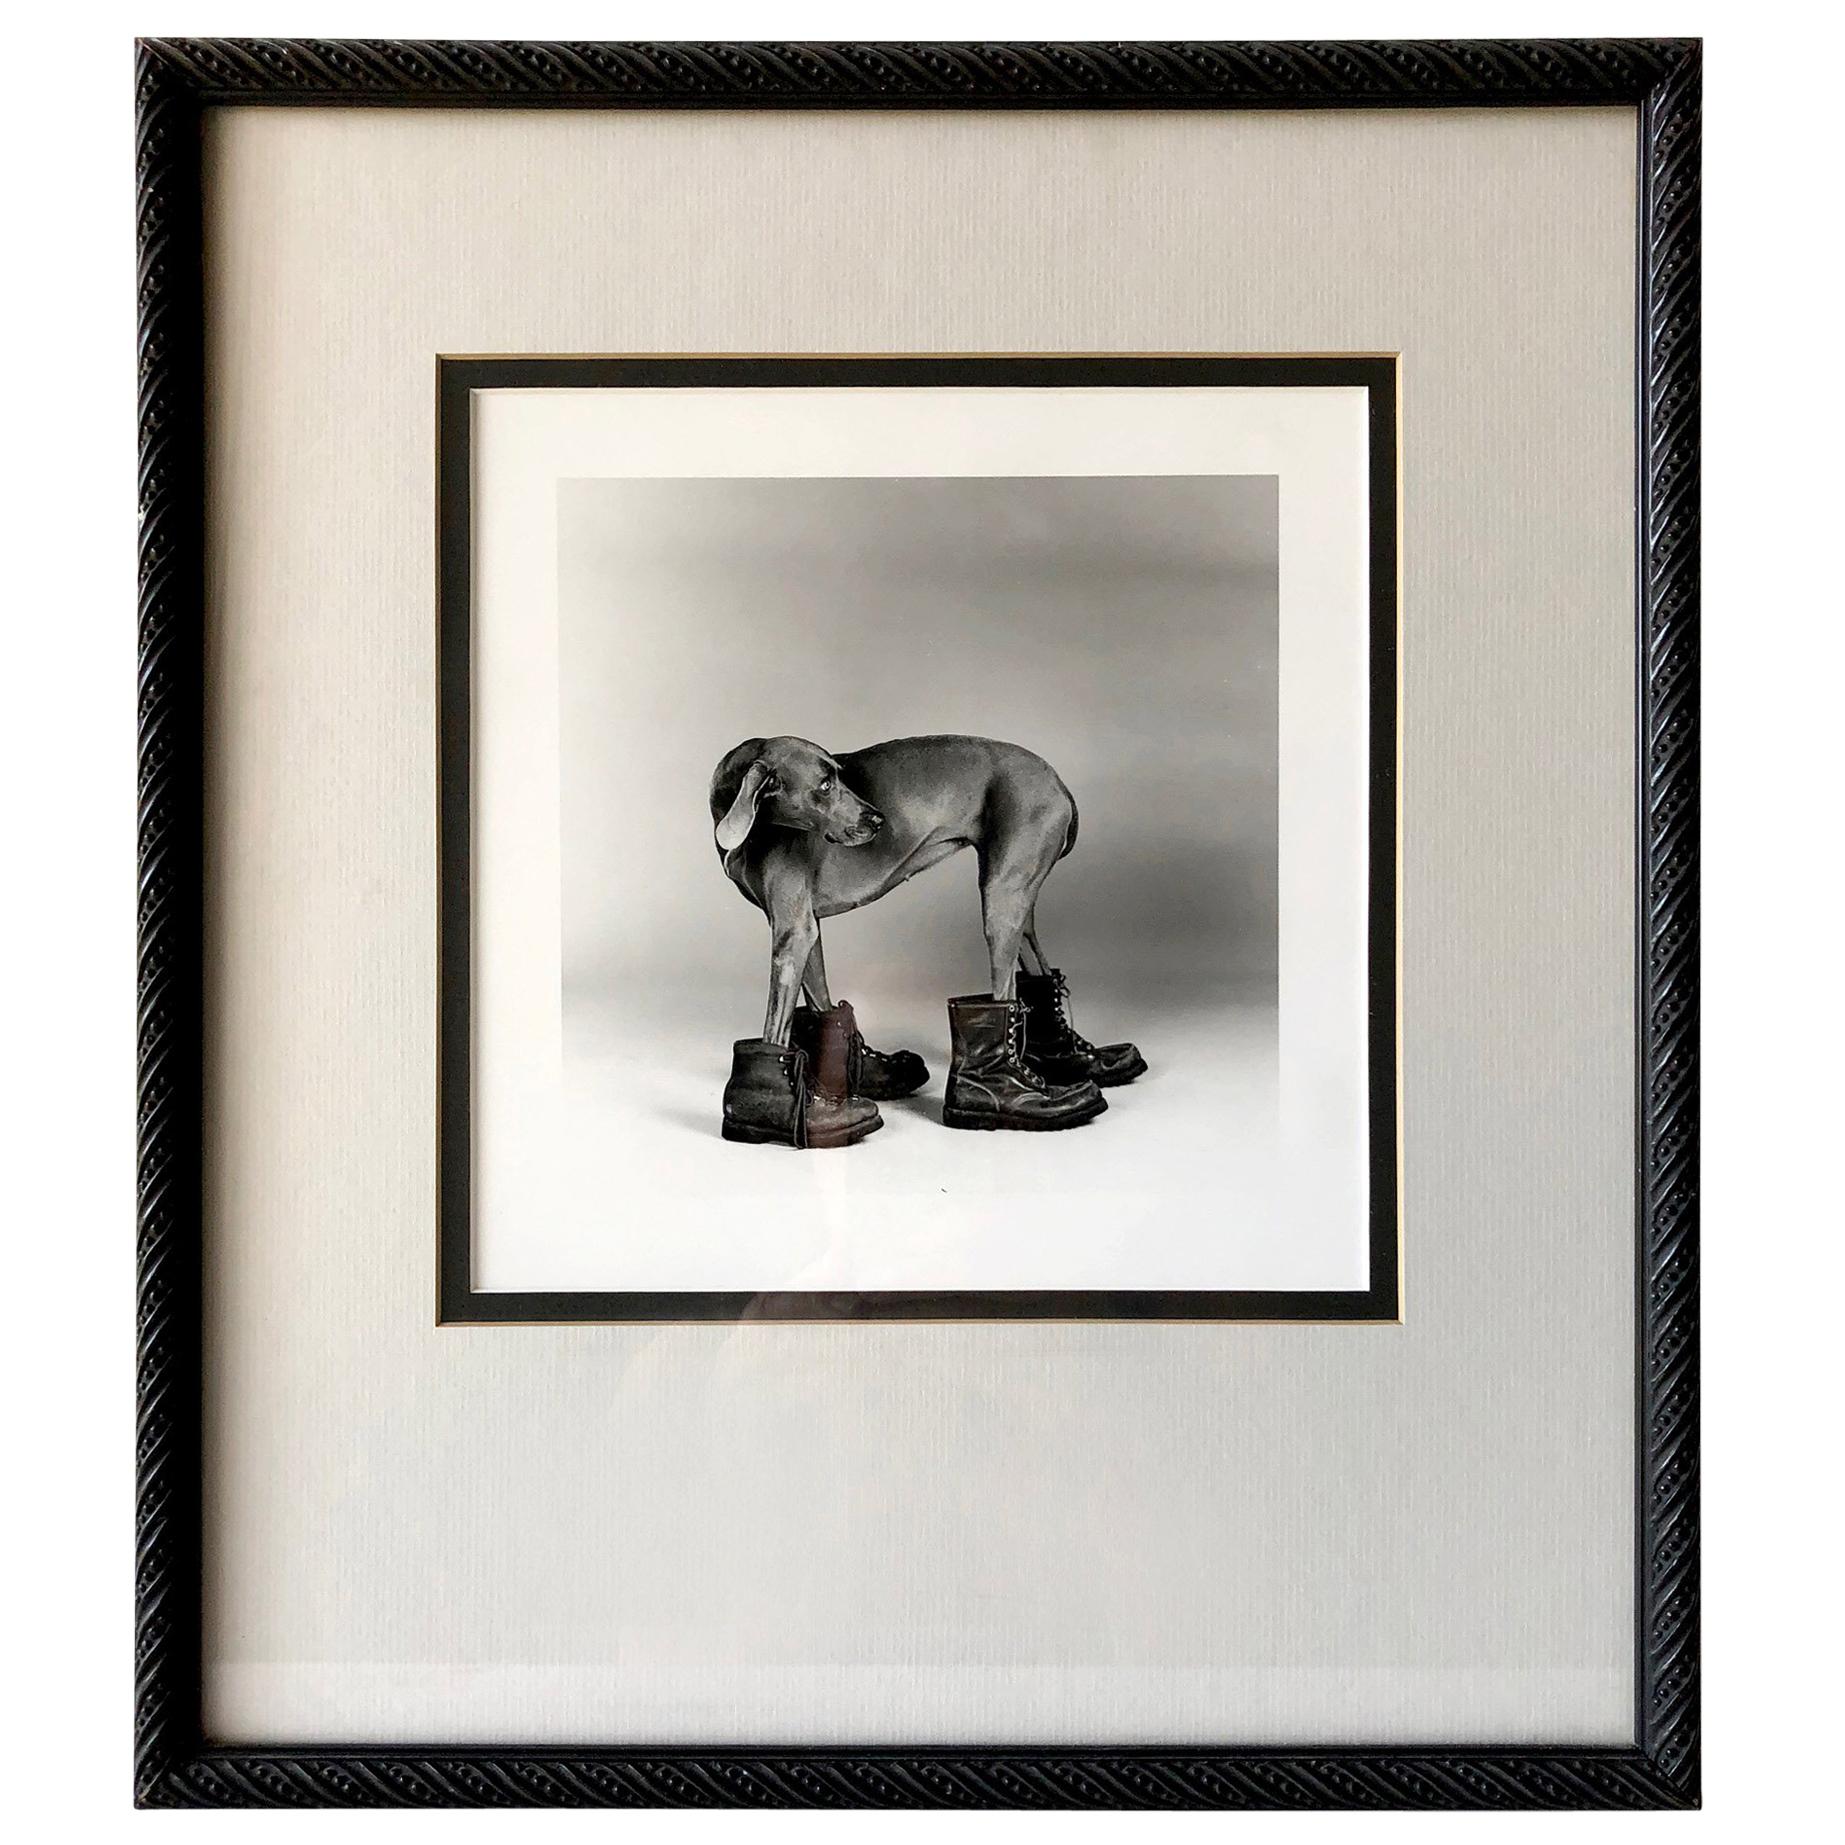 William Wegman Silver Print Photograph Dog Wearing Boots, 1988